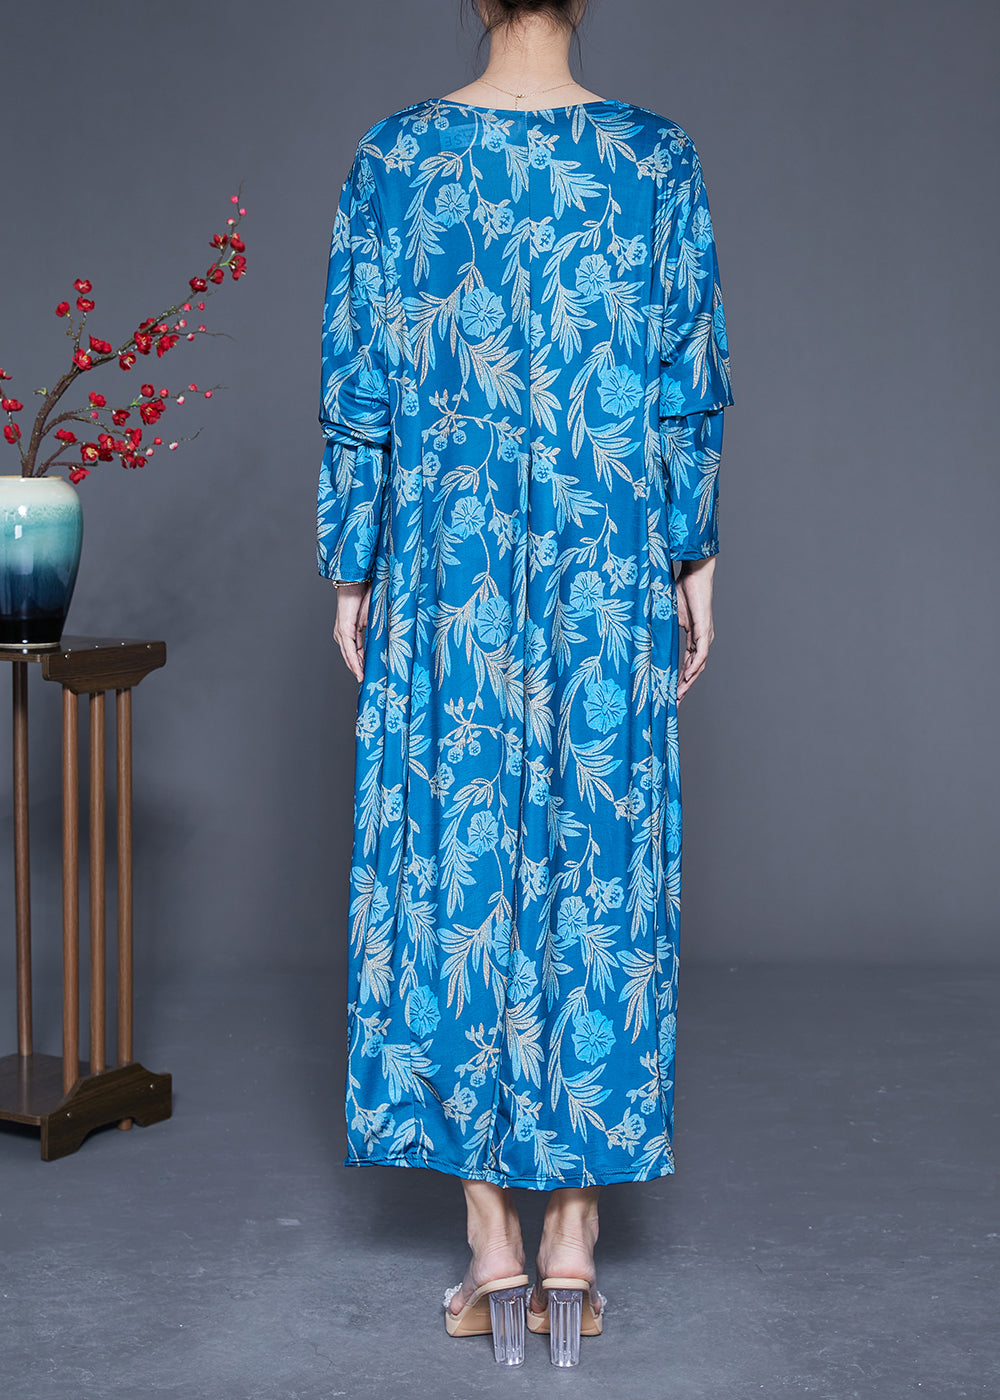 Blue Print Silk Holiday Dresses V Neck Oversized Spring